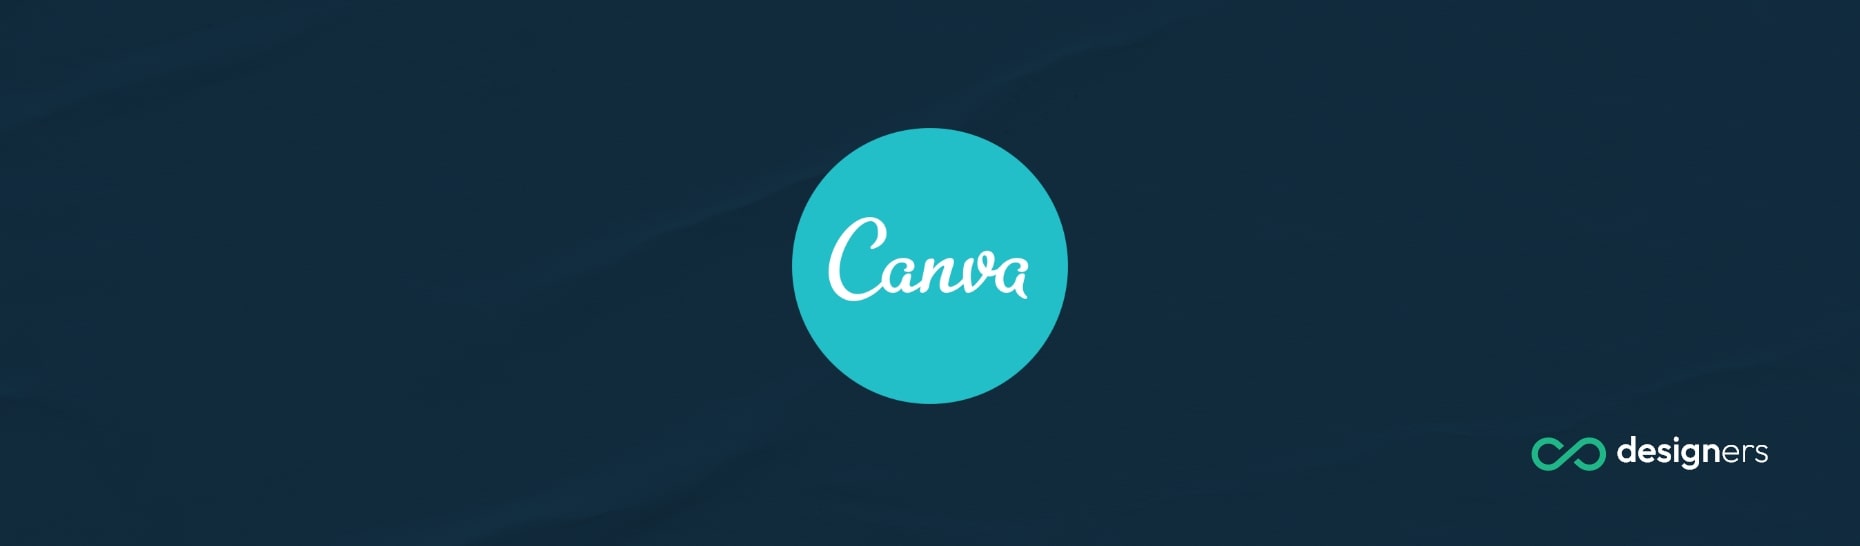 Is Canva an Online App?